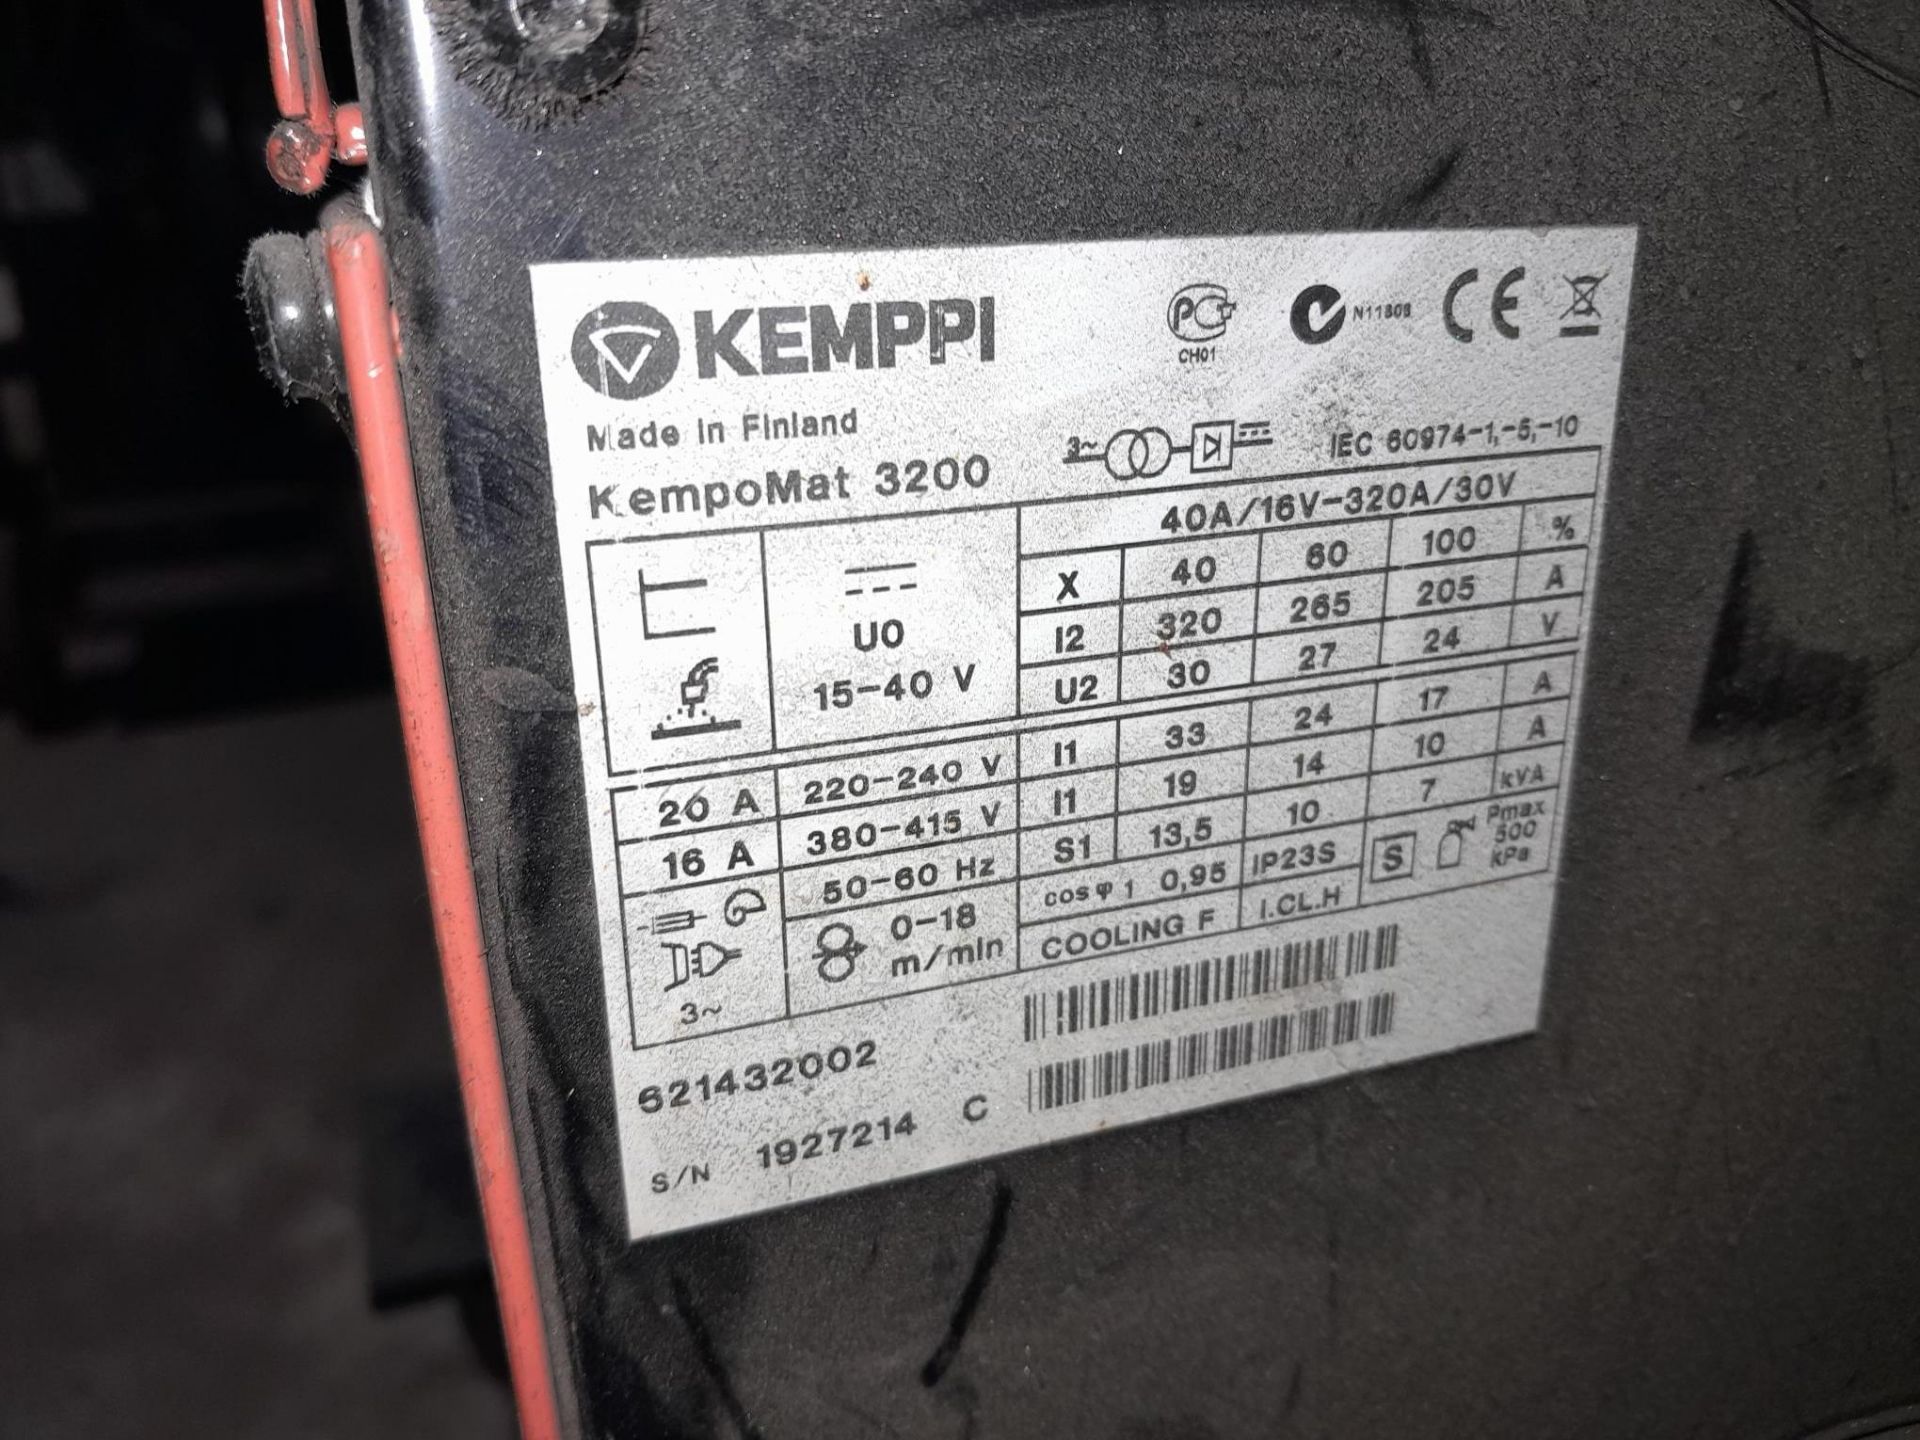 Kemppi Kempomat 3200 welding set, Serial Number 19 - Bild 2 aus 2